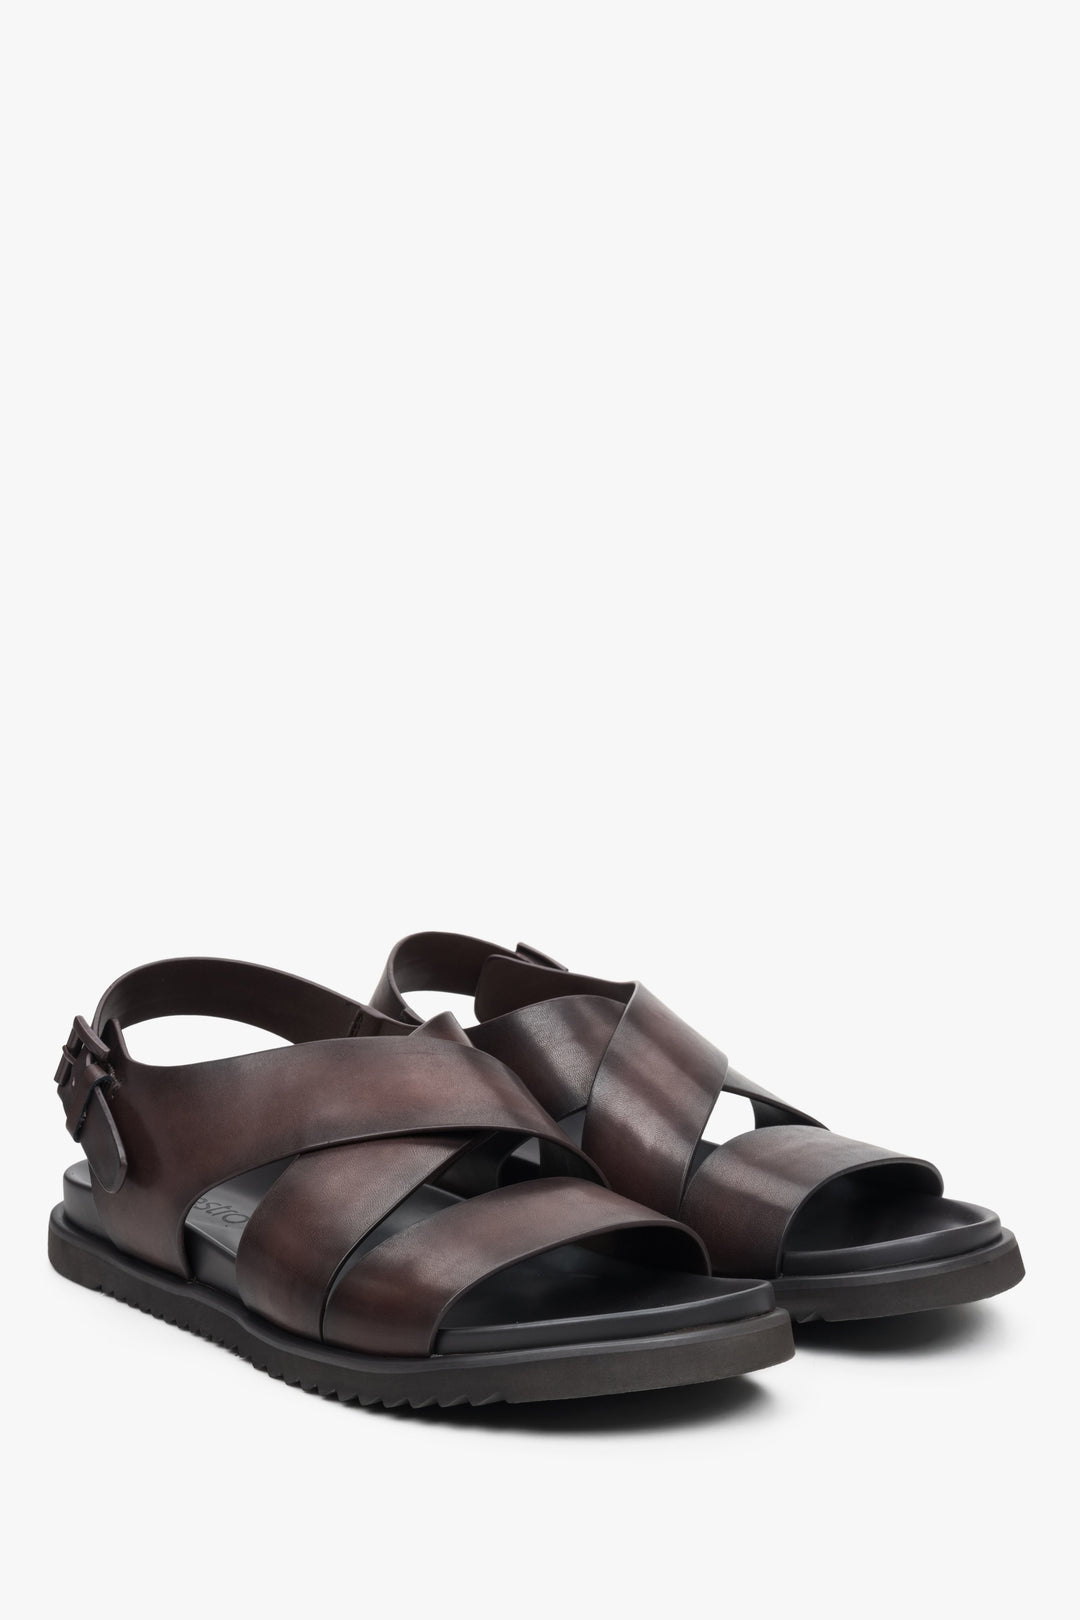  Men's dark beige leather summer sandals with thick, crossed straps, by Estro.